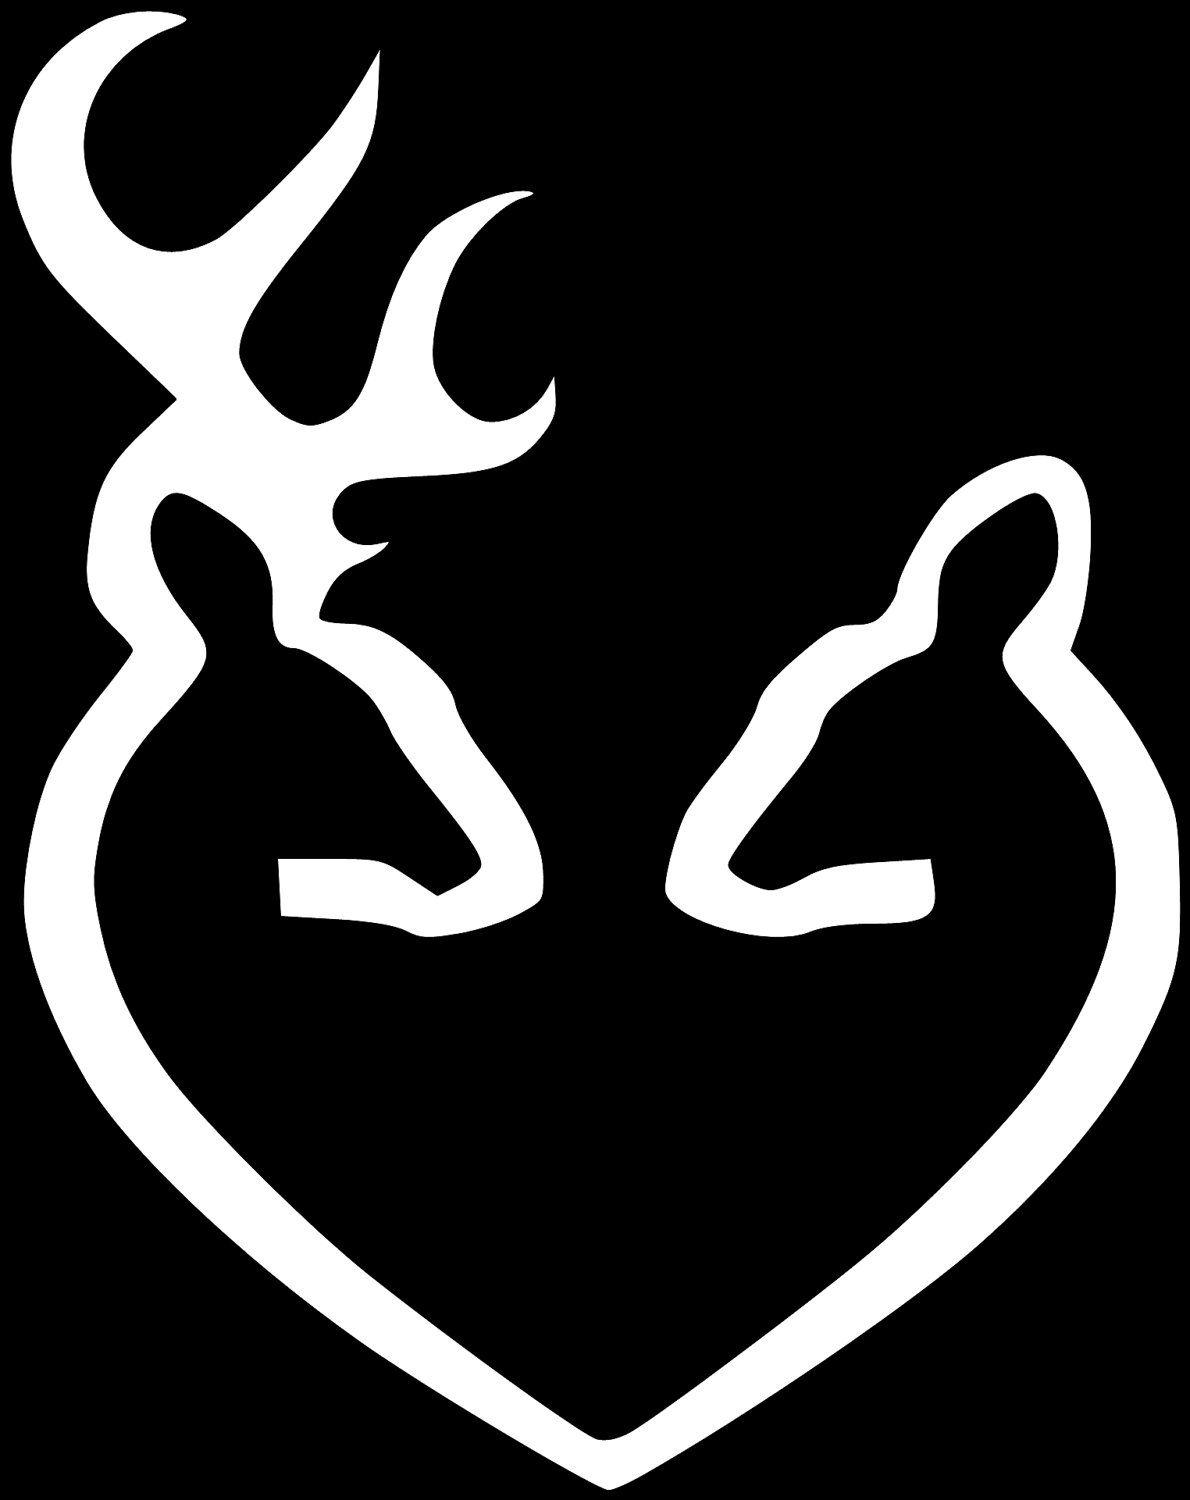 Browning Logo - Free Browning Deer Logo Pictures, Download Free Clip Art, Free Clip ...